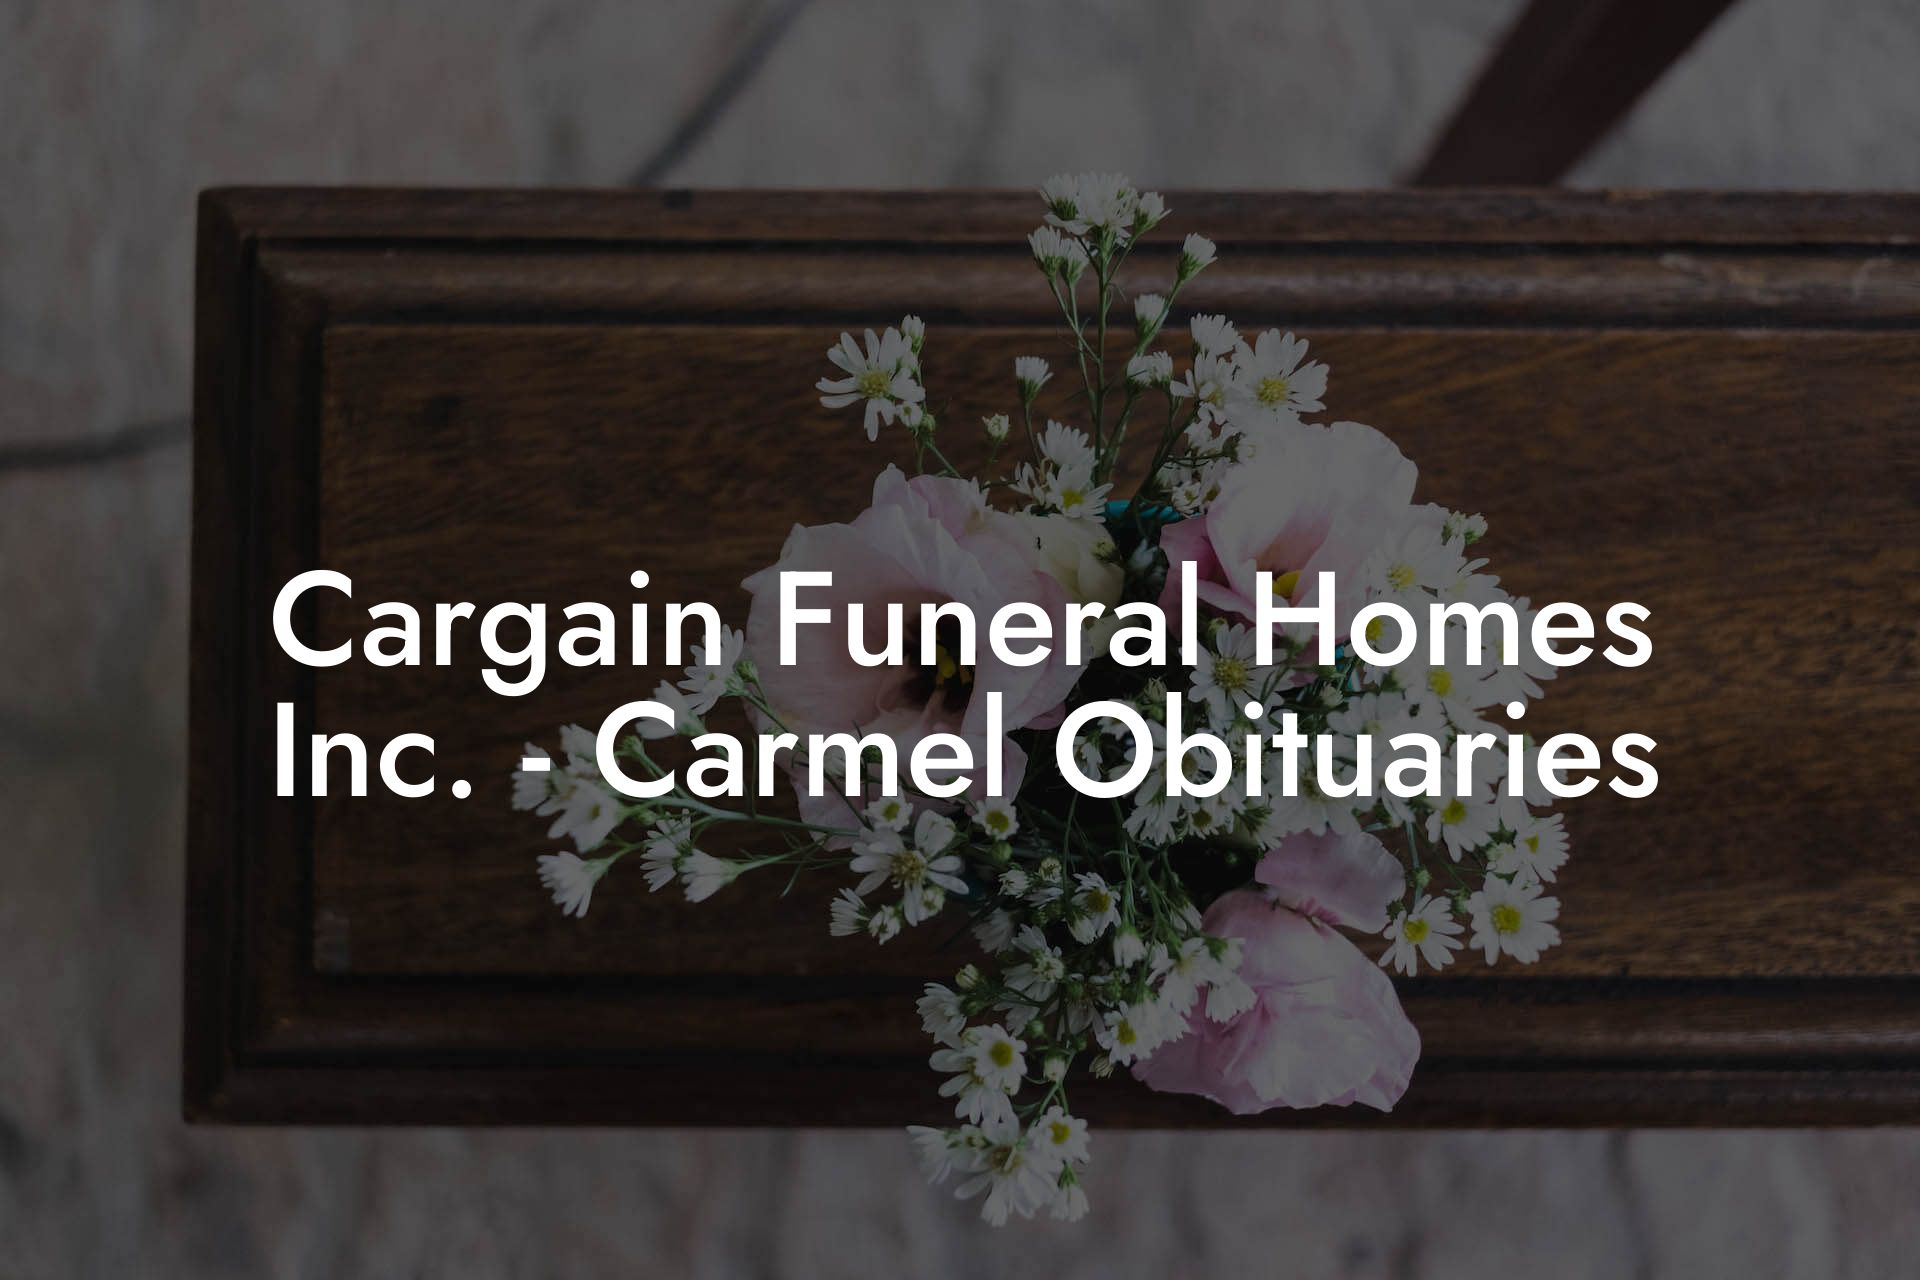 Cargain Funeral Homes Inc. - Carmel Obituaries